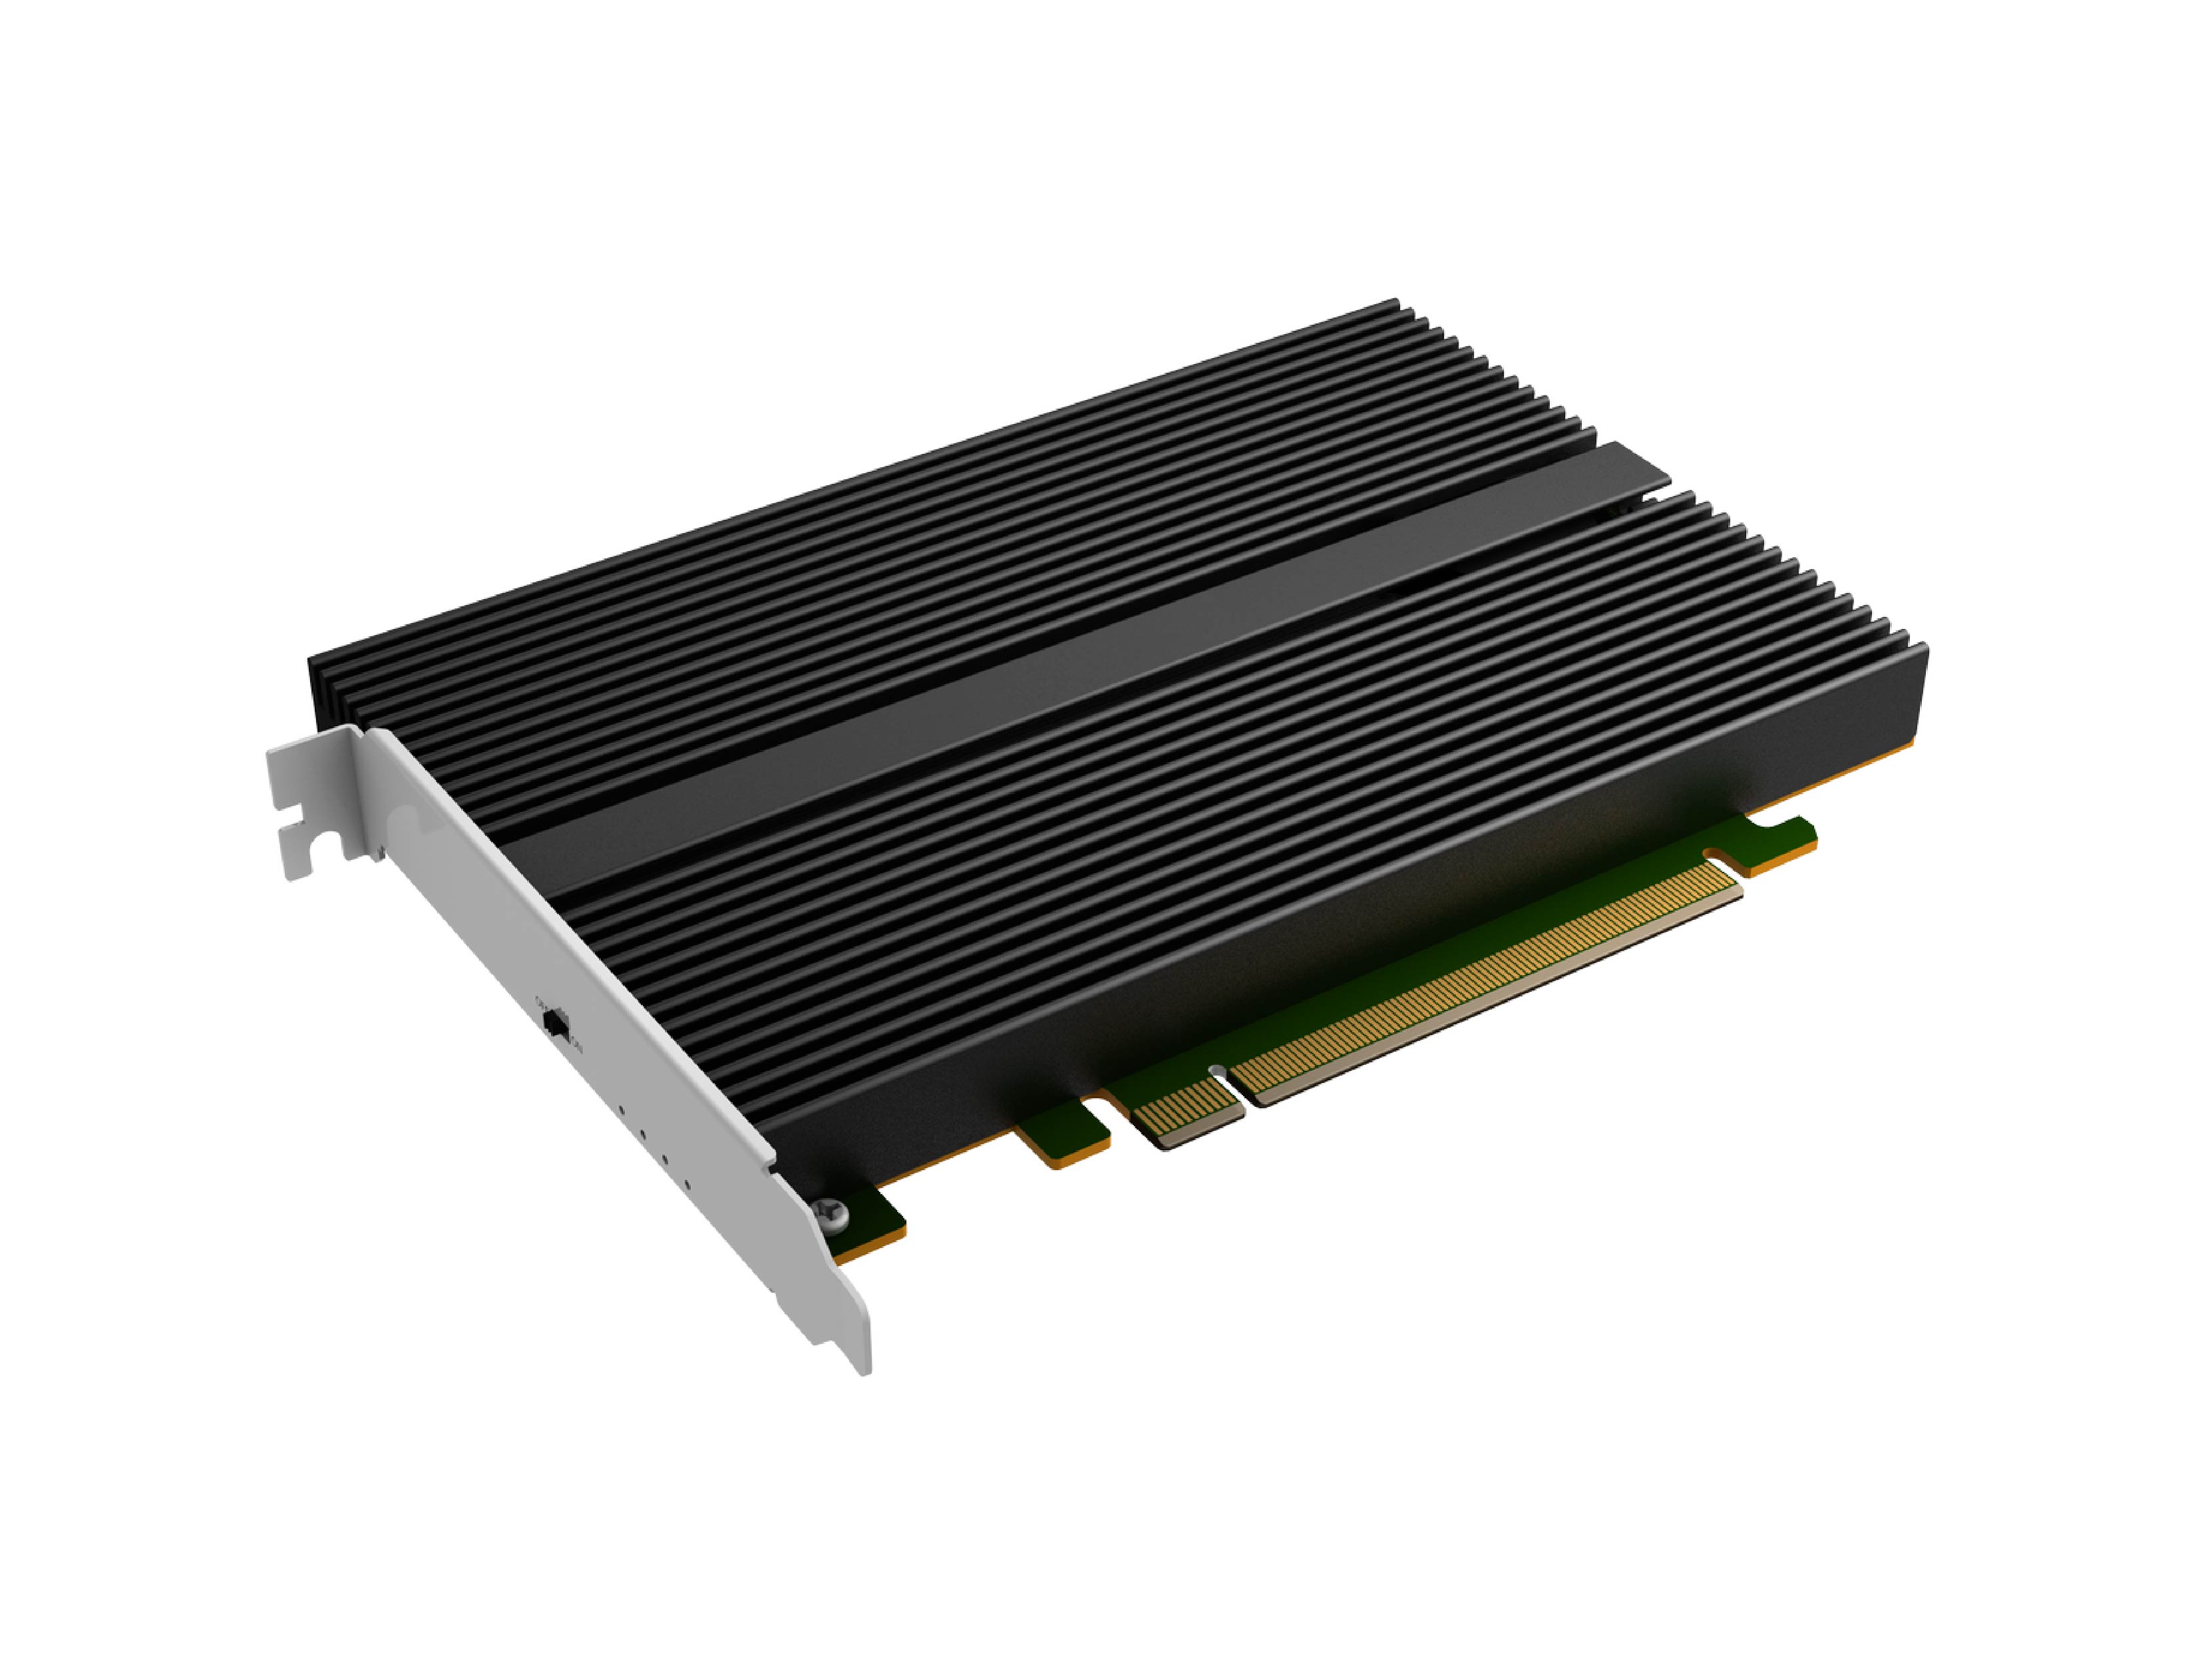 4 Bay M.2 NVMe SSD PCIex16 Add-on Card